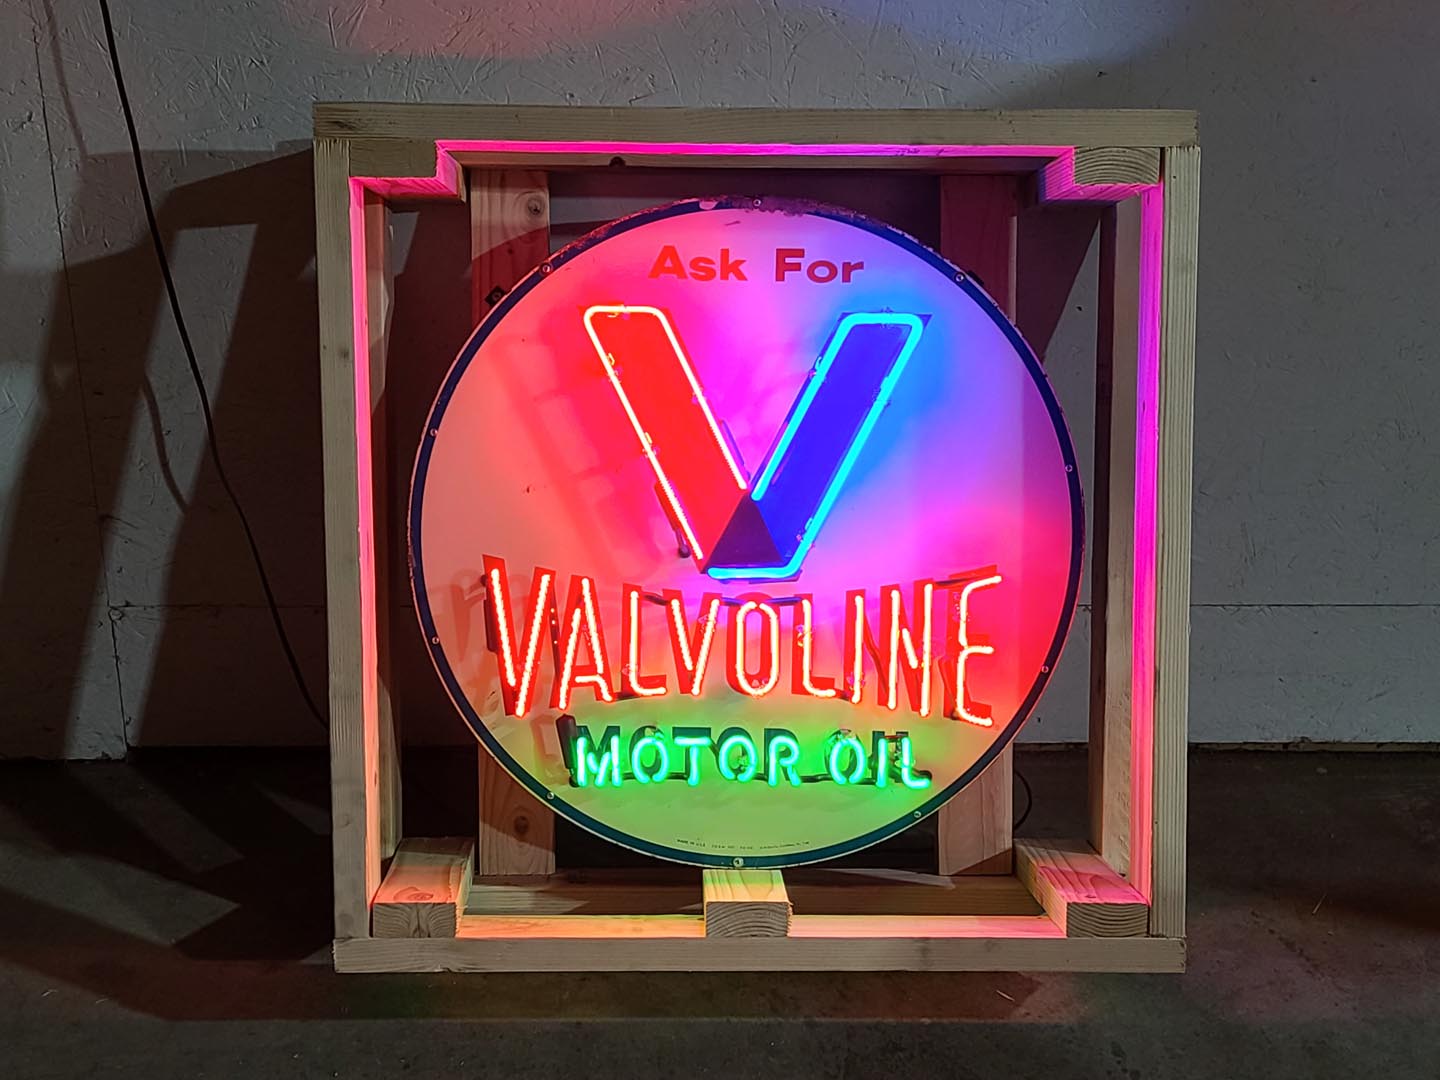  Valvoline Motor Oil Original T in Neon Sign 